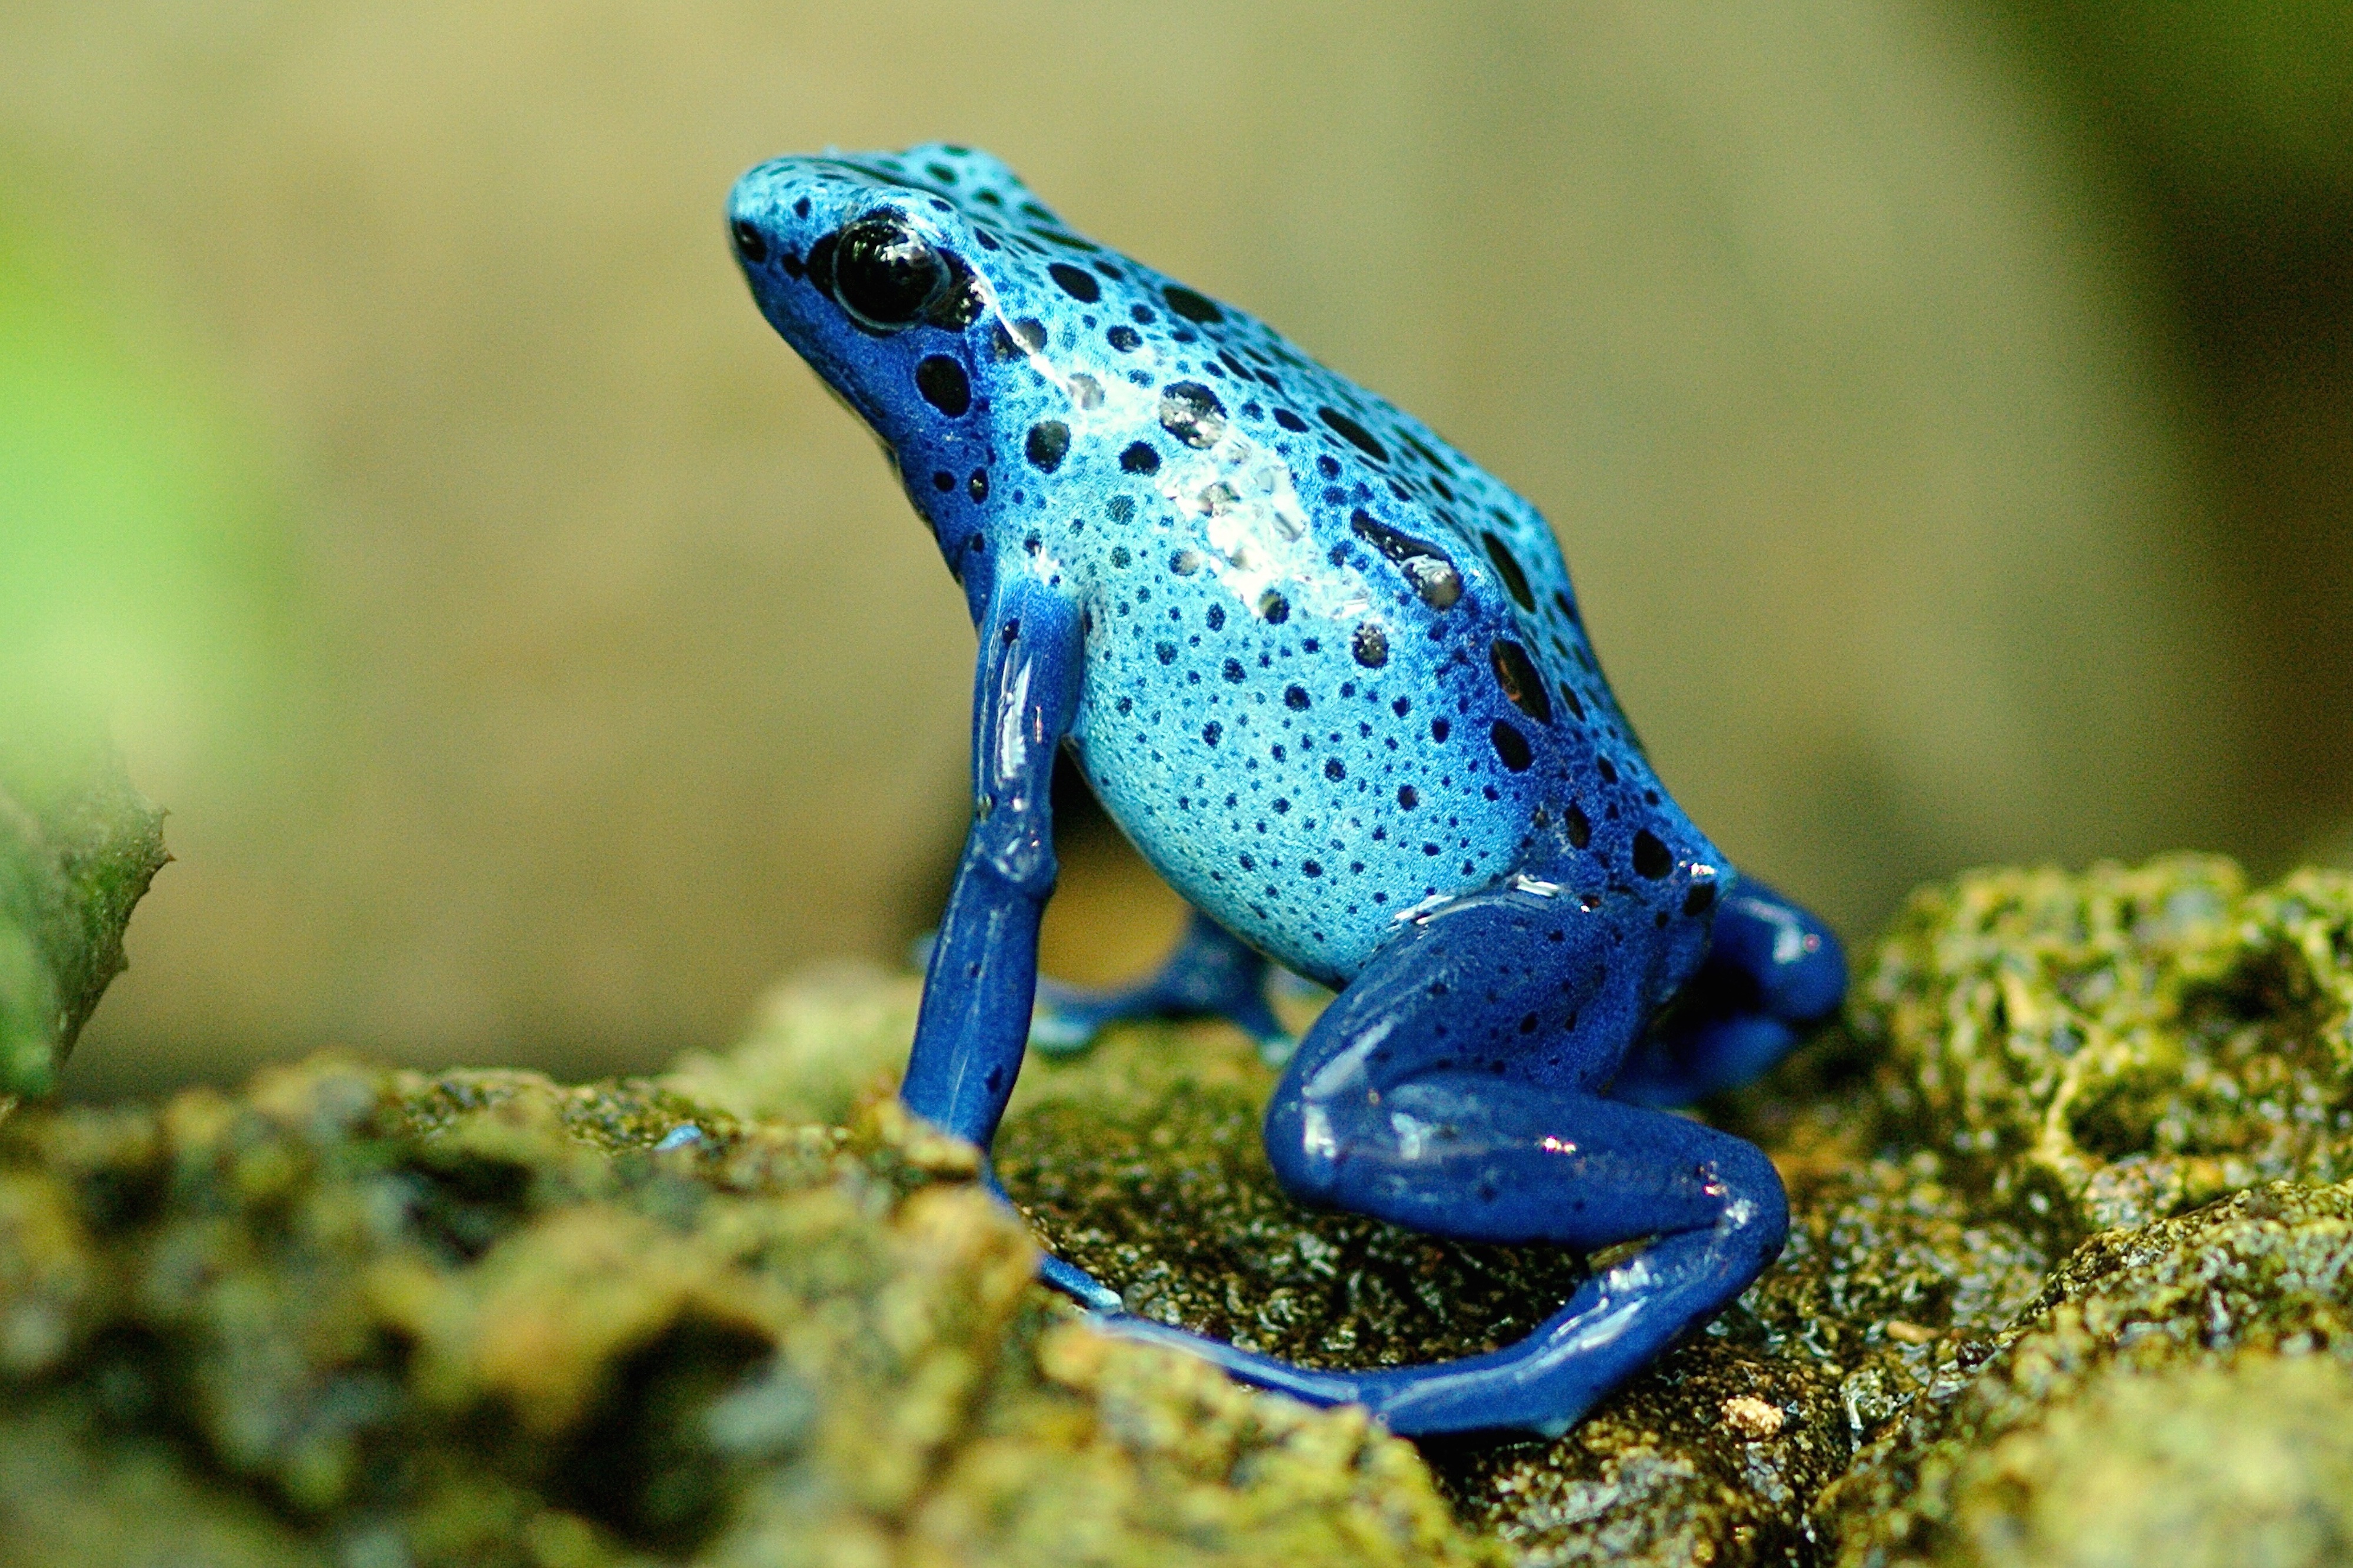 Zastaki.com - Голубая экзотическая лягушка на камне